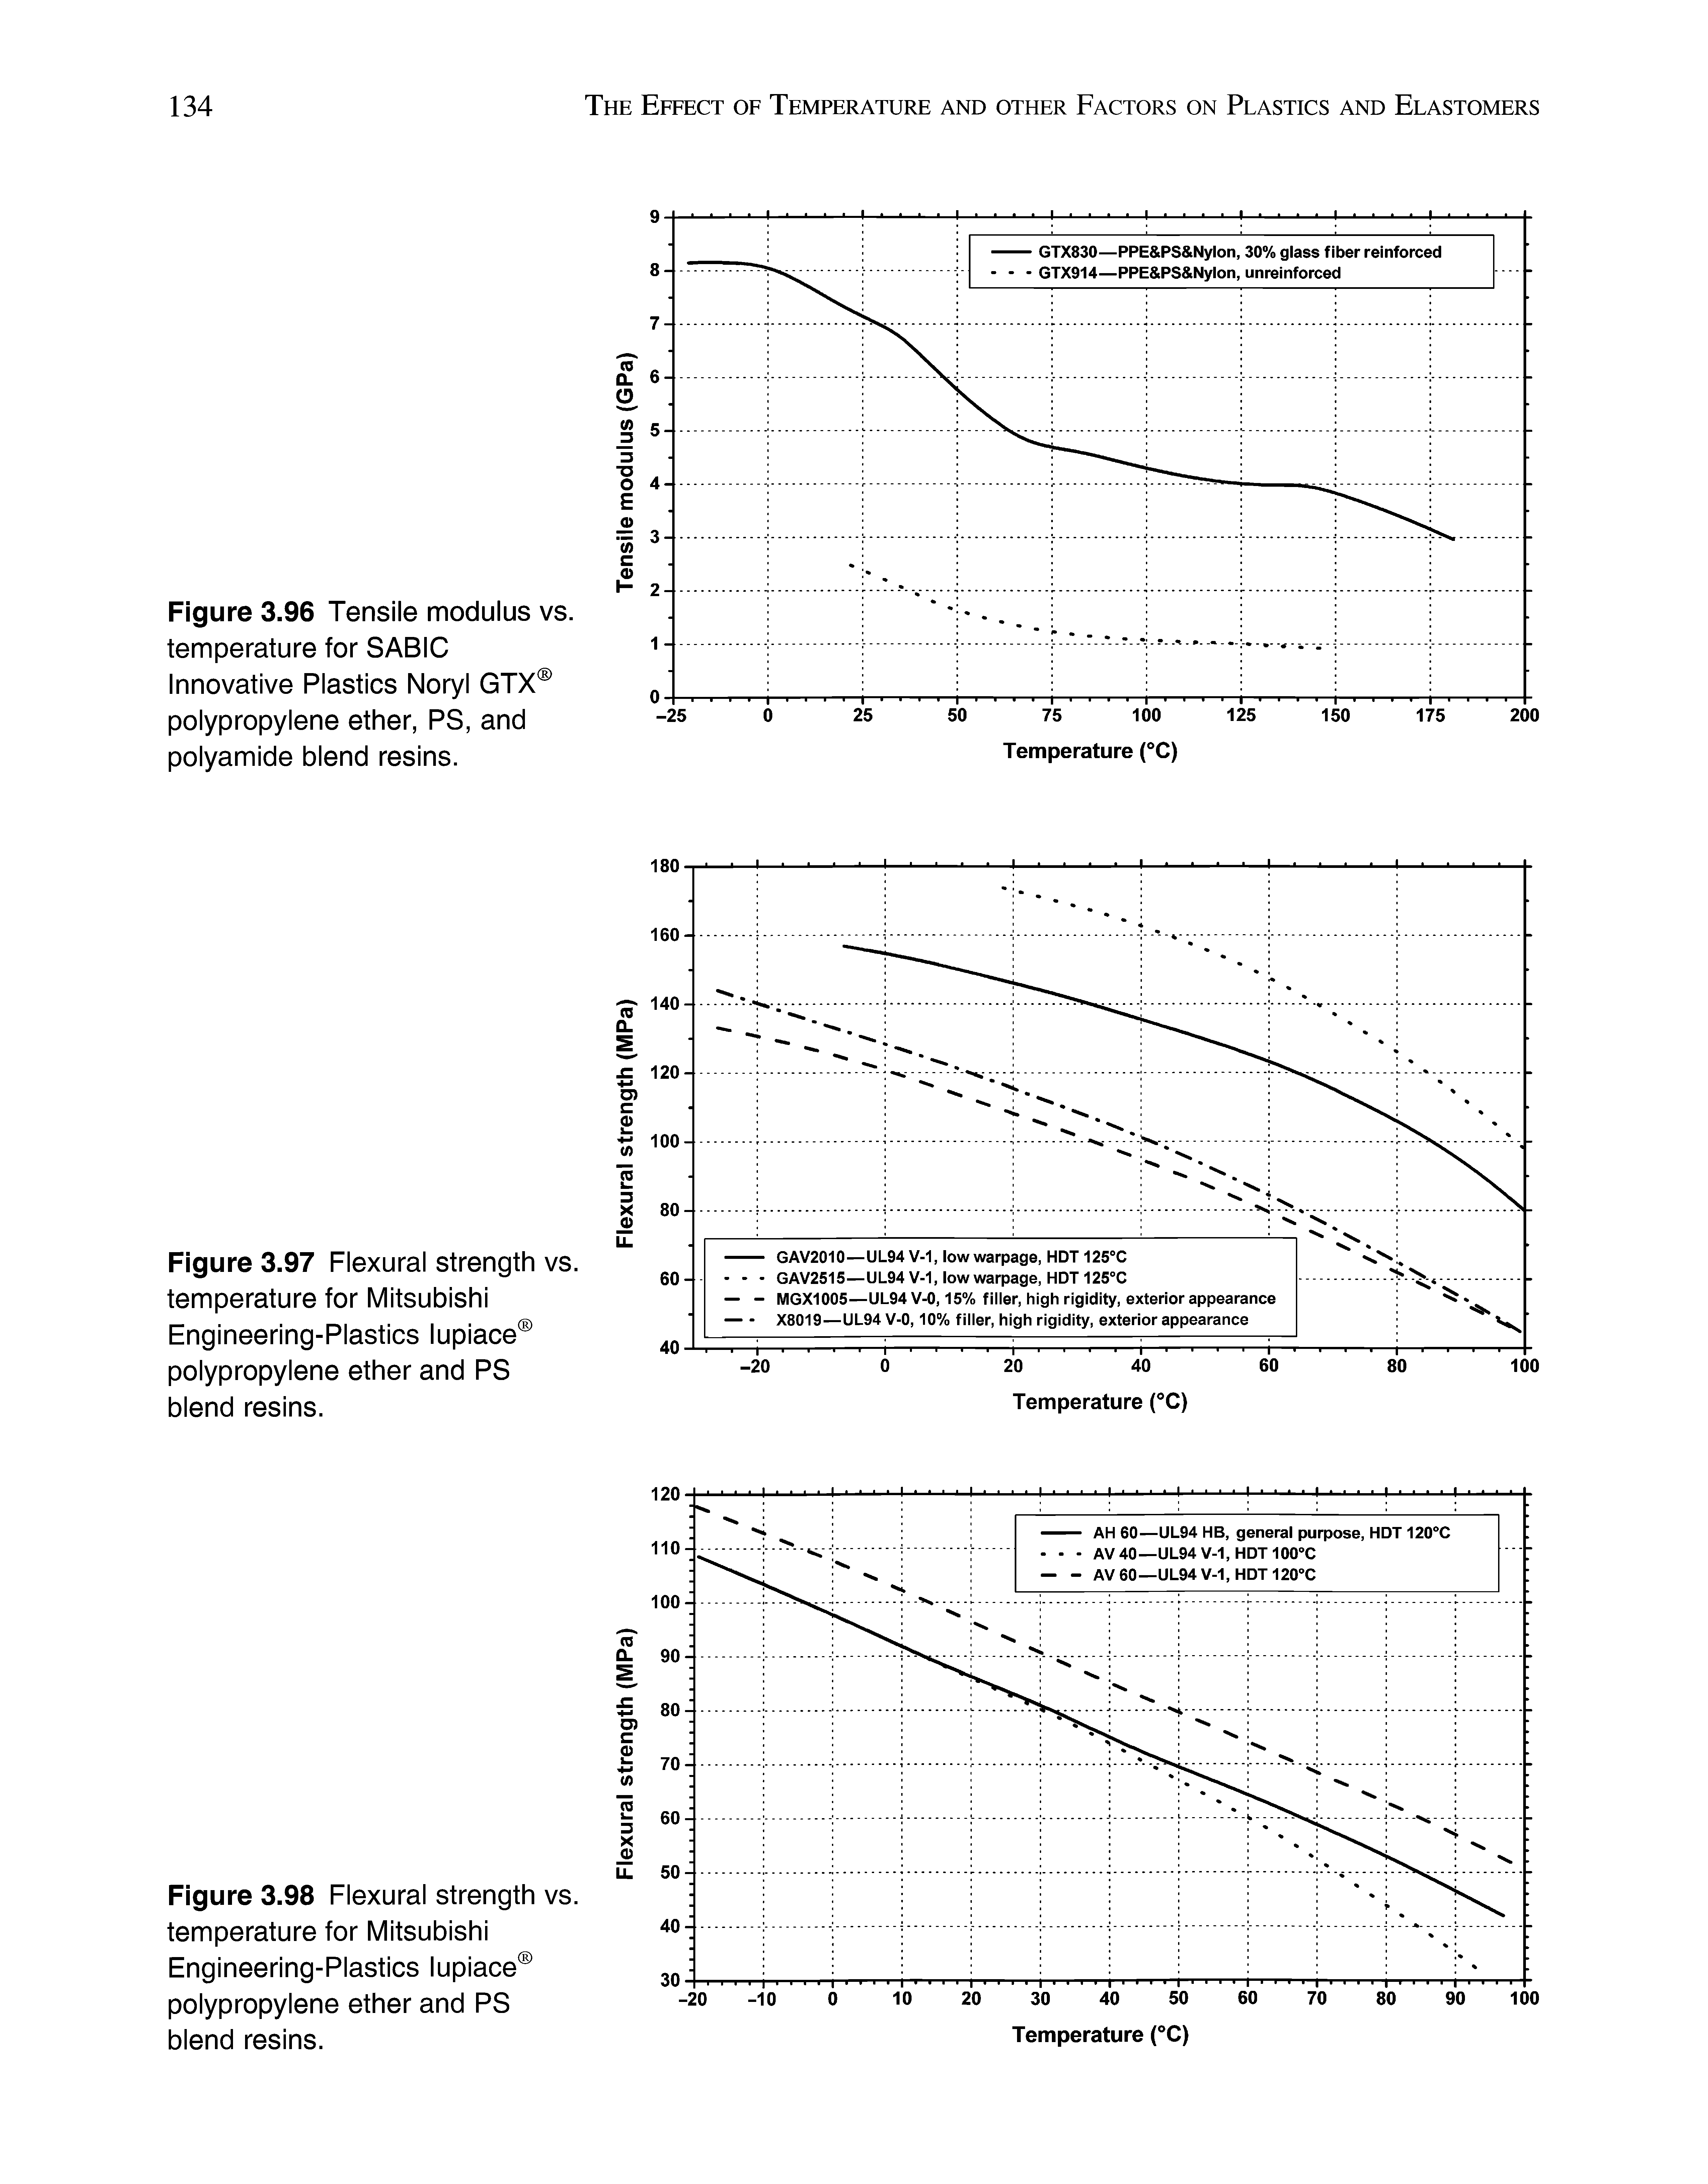 Figure 3.96 Tensile modulus vs. temperature for SABIC Innovative Plastics Noryl GTX polypropylene ether, PS, and polyamide blend resins.